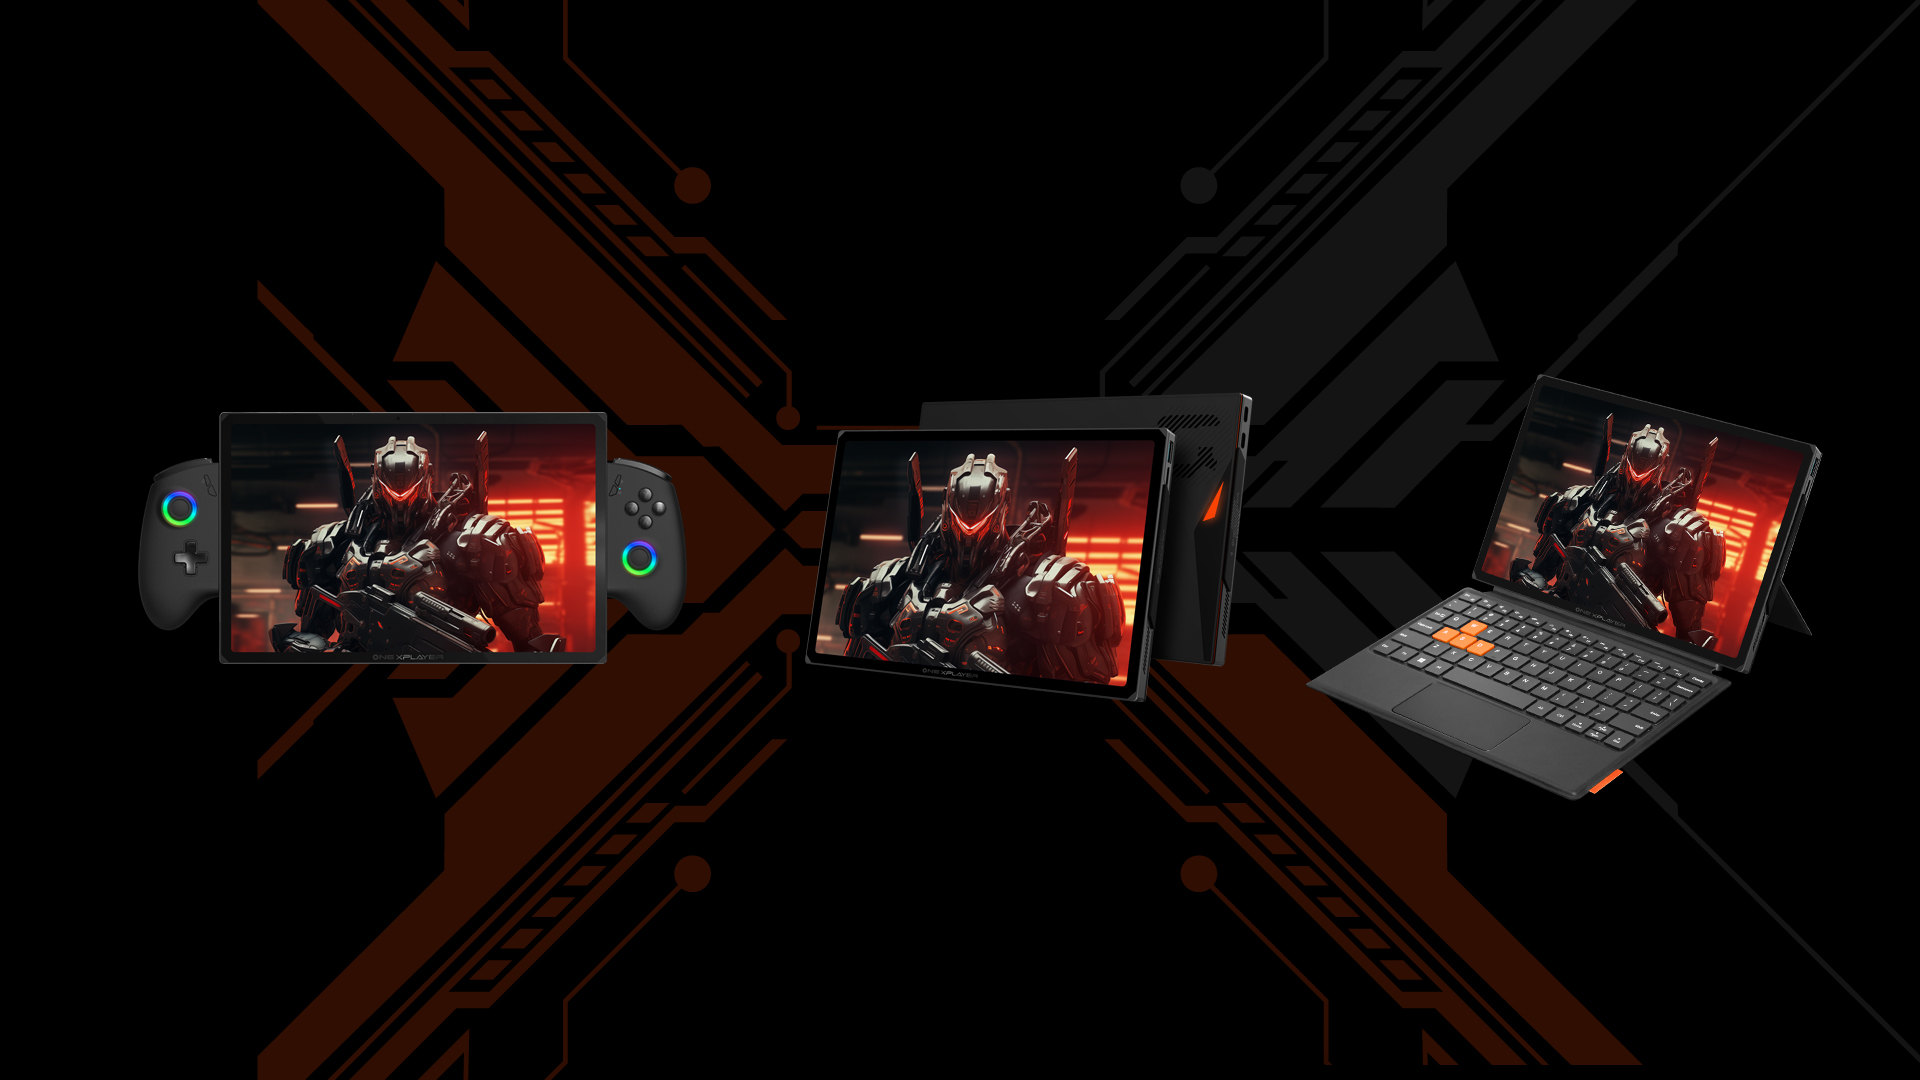 OneXPlayer enthüllt Preise für OneXPlayer X1, neuer Intel Meteor Lake Handheld beginnt bei 859 US-Dollar 1